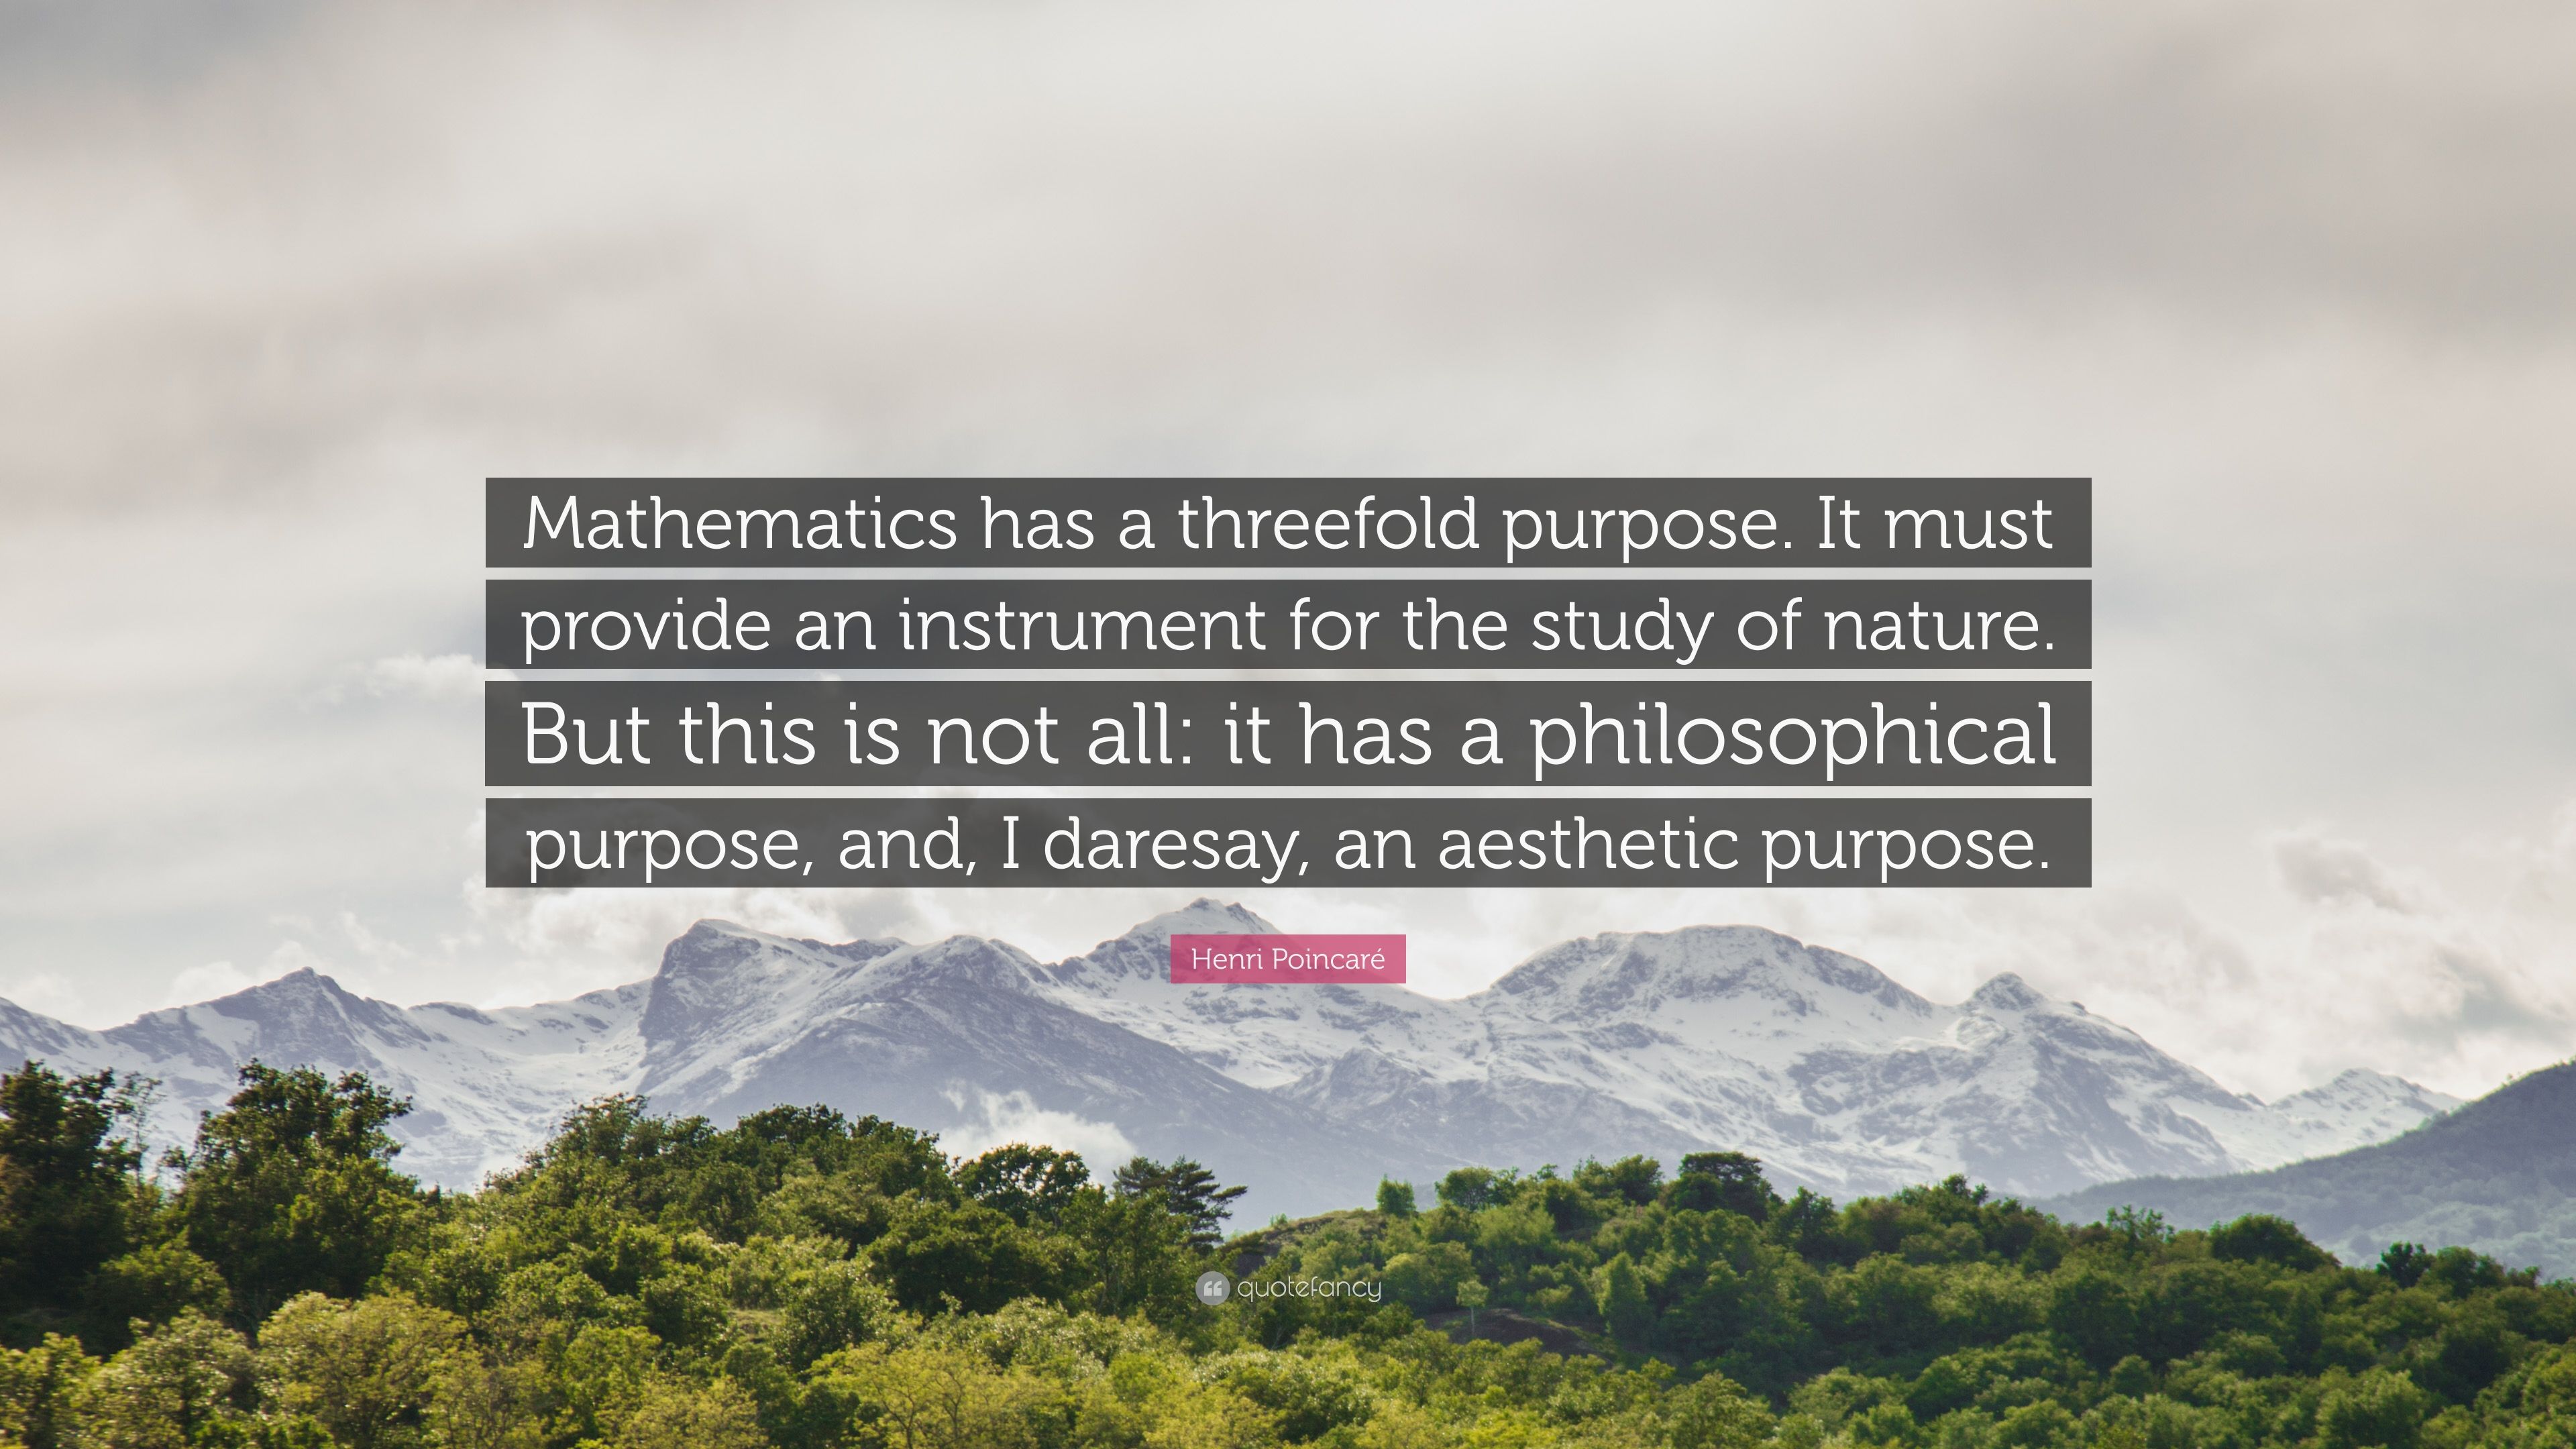 Henri Poincaré Quote: “Mathematics has a threefold purpose. It